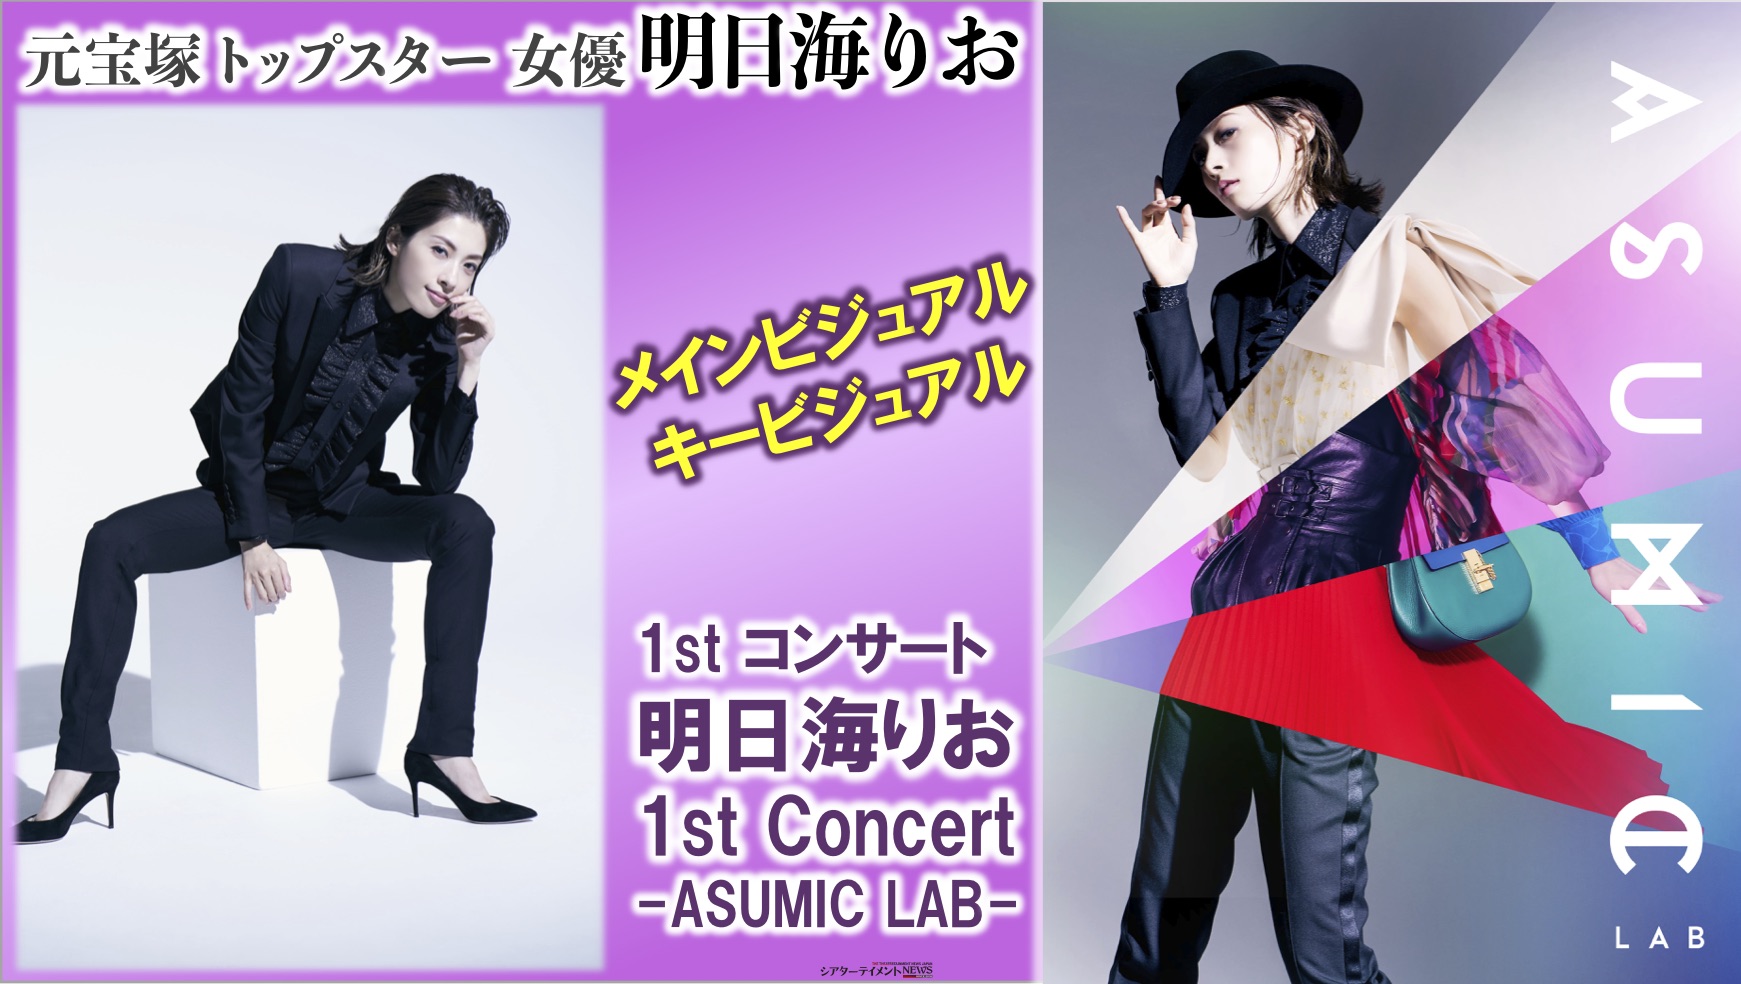 ASUMIC LAB Blu-ray 明日海りお - DVD/ブルーレイ